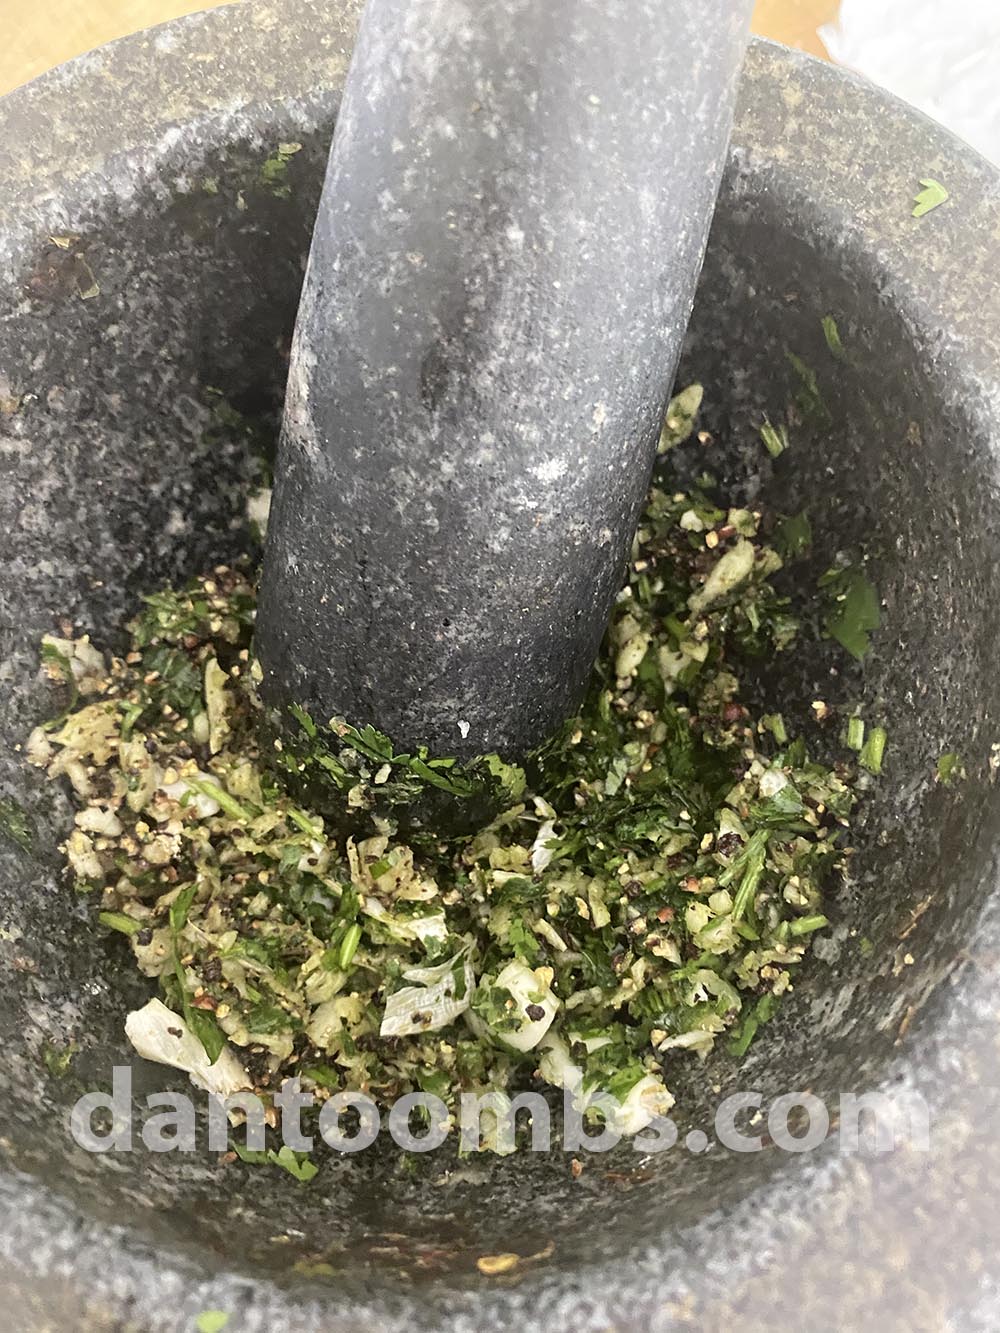 Pounding garlic, coriander and black pepper in mortar